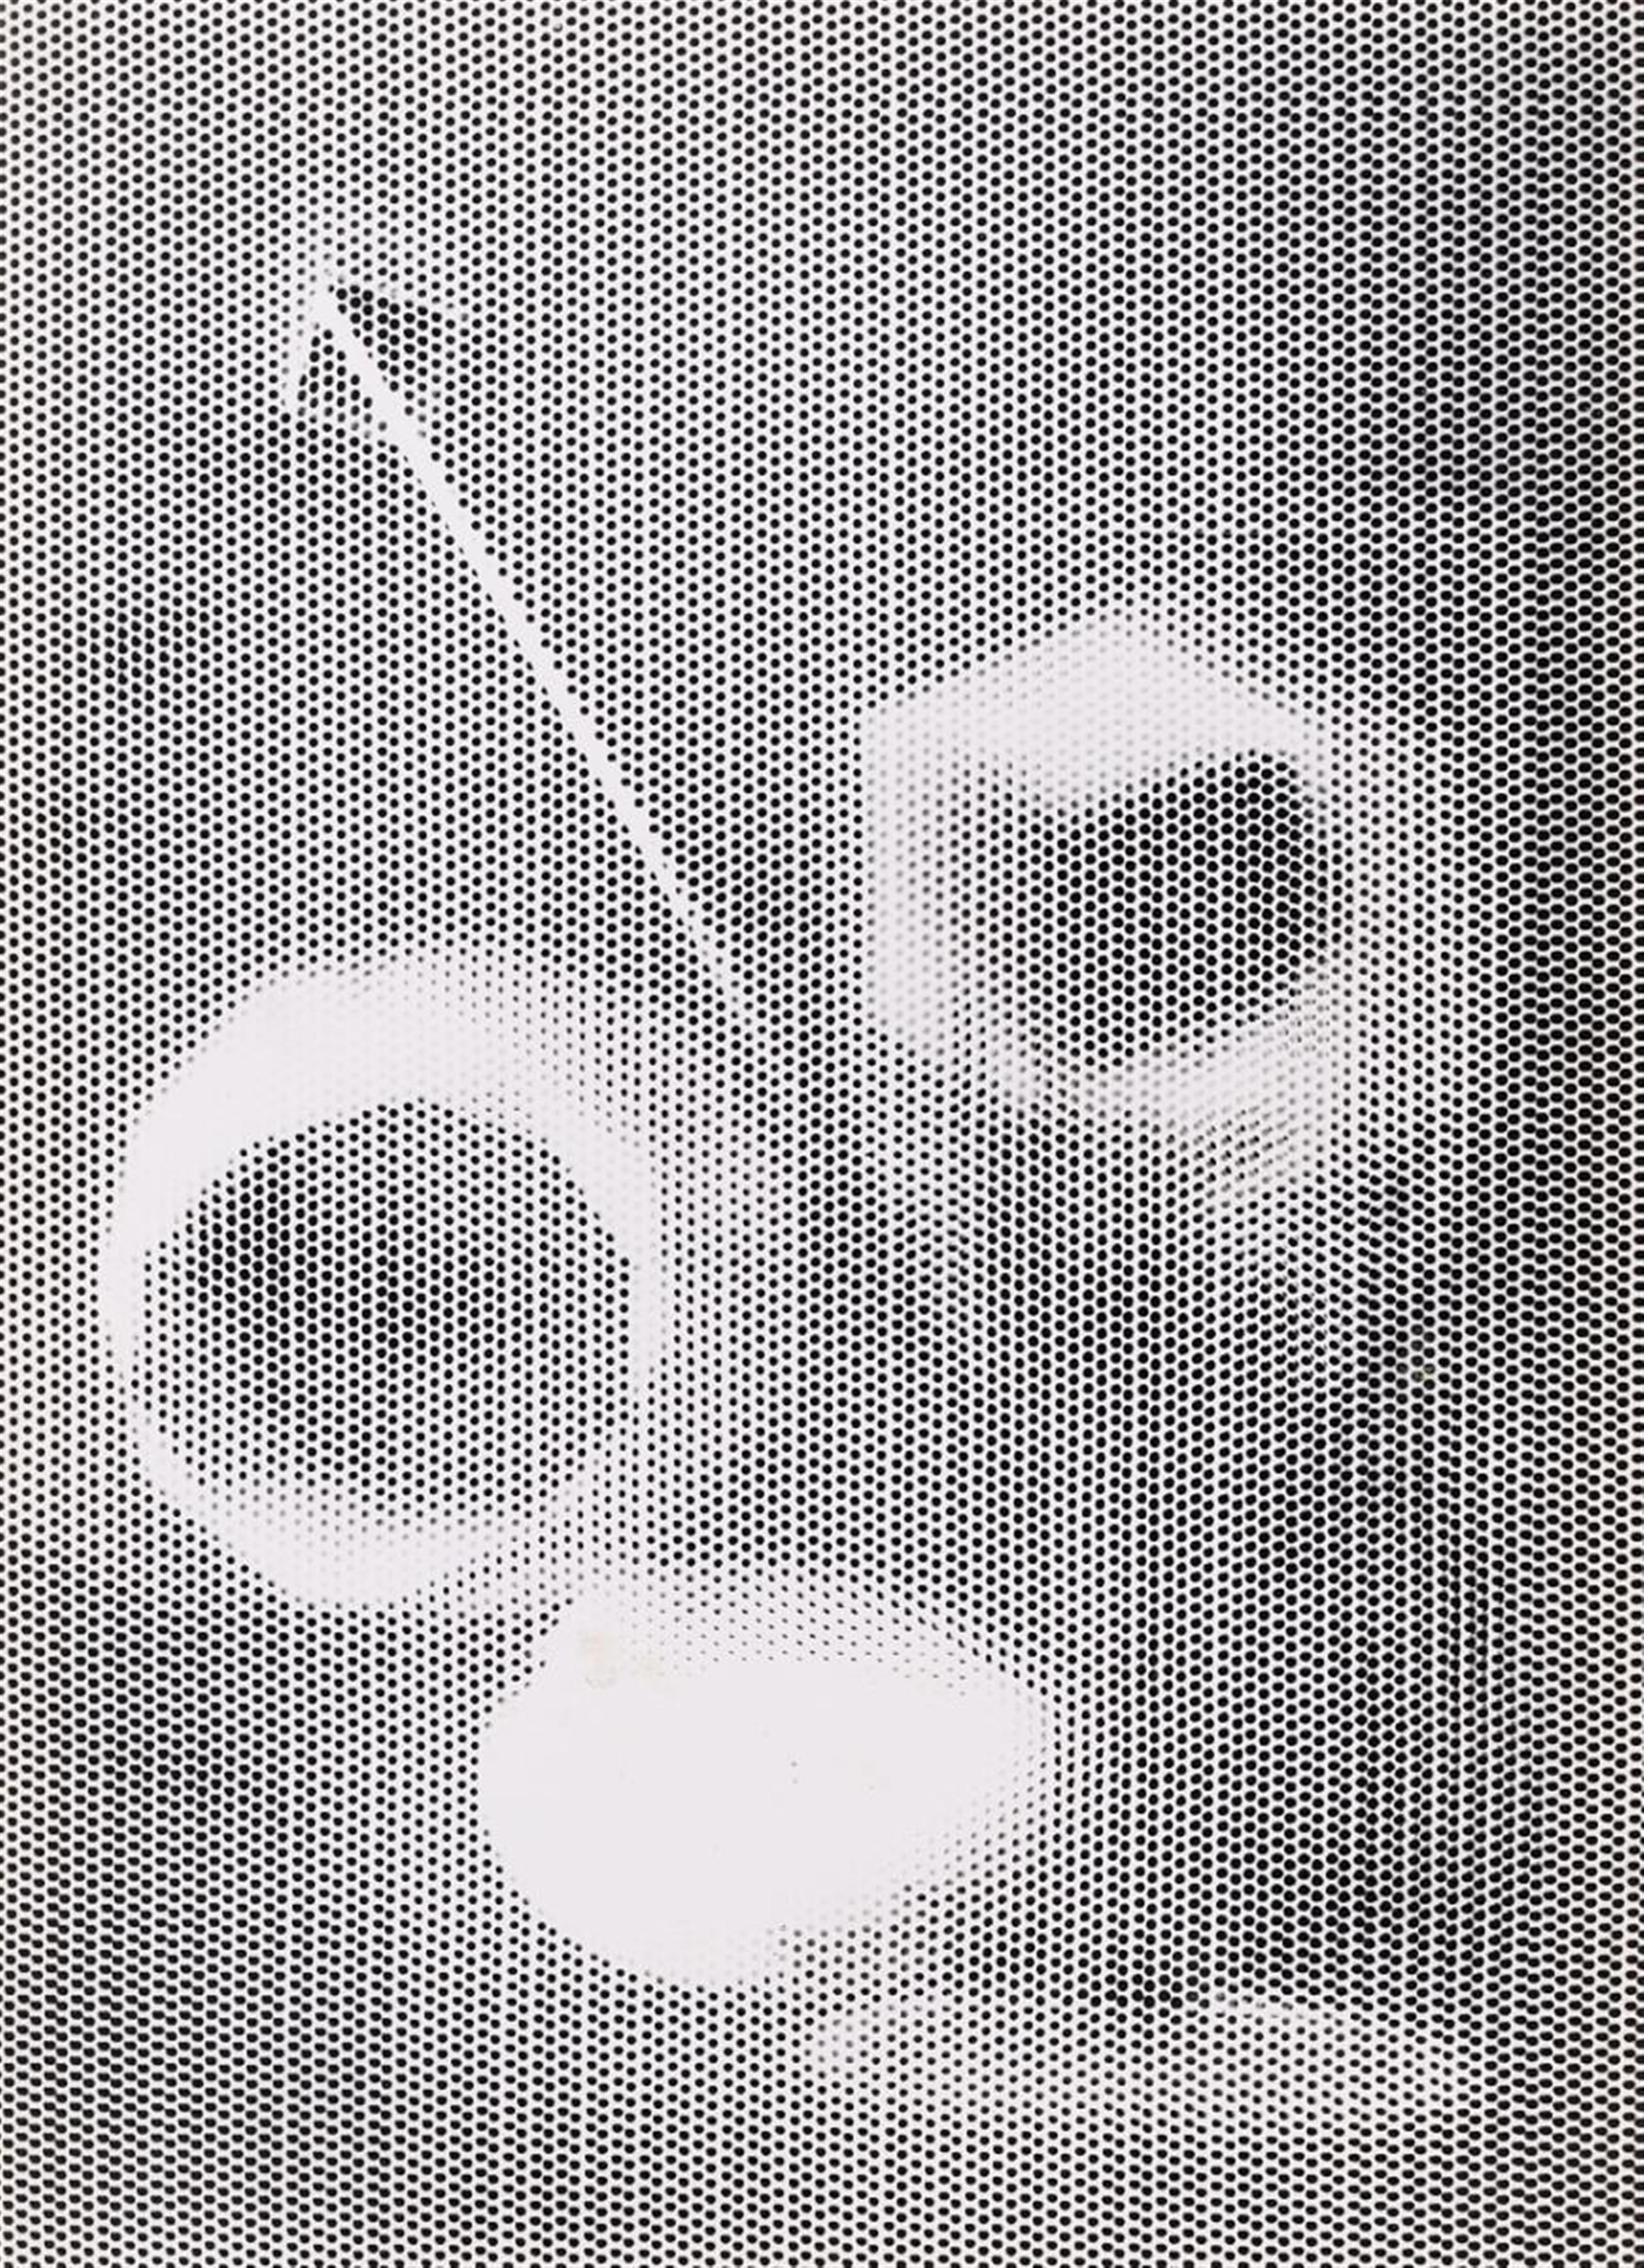 Man Ray - Ohne Titel (Rayographs) - image-4